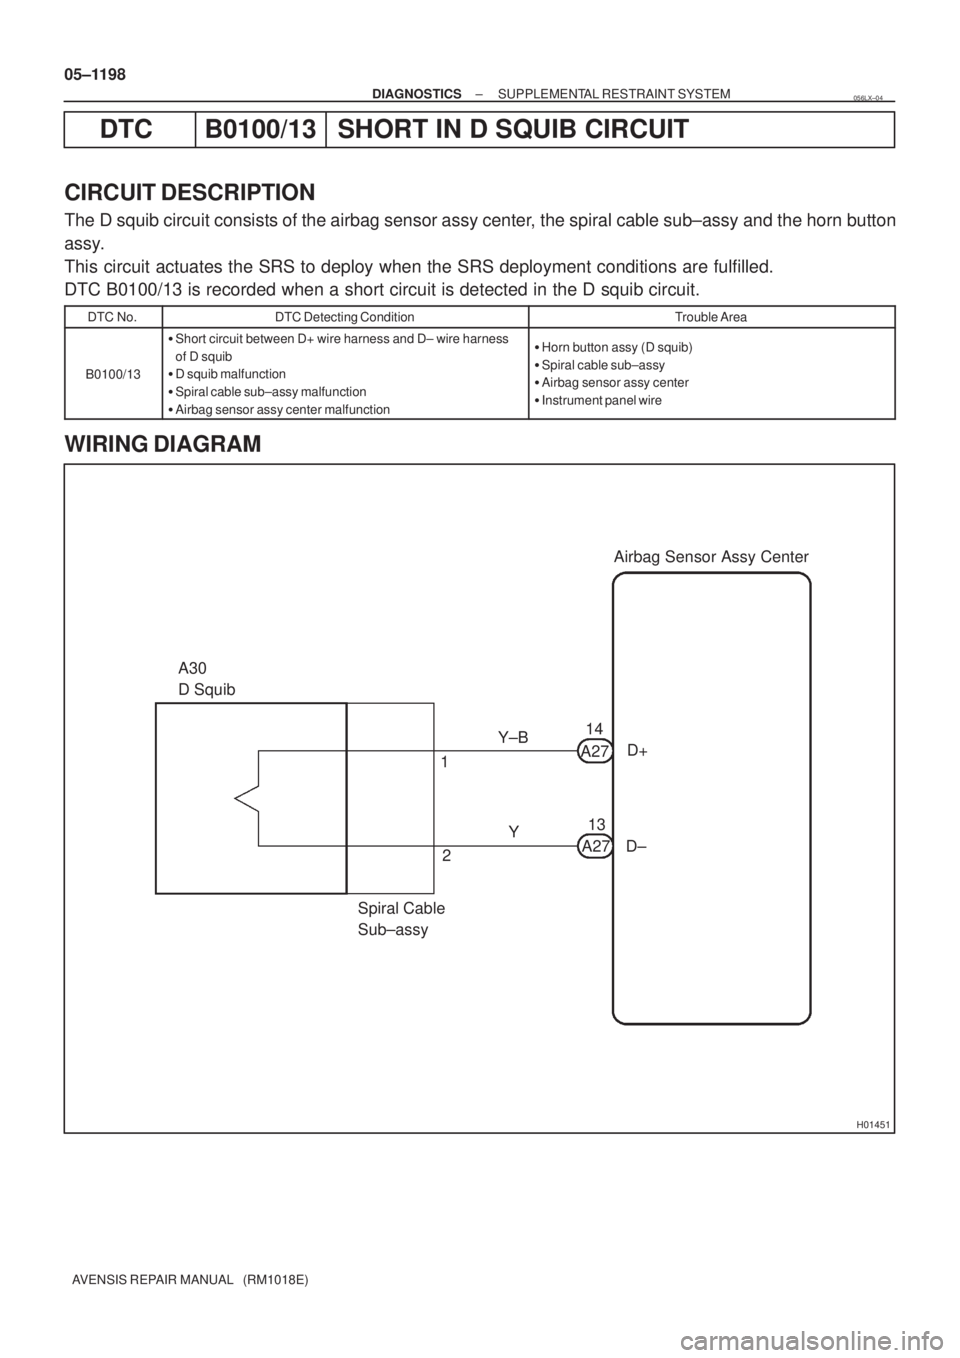 TOYOTA AVENSIS 2005  Service Repair Manual H01451
A30
D Squib
1
2Y±B
YA2714Airbag Sensor Assy Center
Spiral Cable
Sub±assyA2713D+
D± 05±1198
± DIAGNOSTICSSUPPLEMENTAL RESTRAINT SYSTEM
AVENSIS REPAIR MANUAL   (RM1018E)
DTC B0100/13 SHORT I